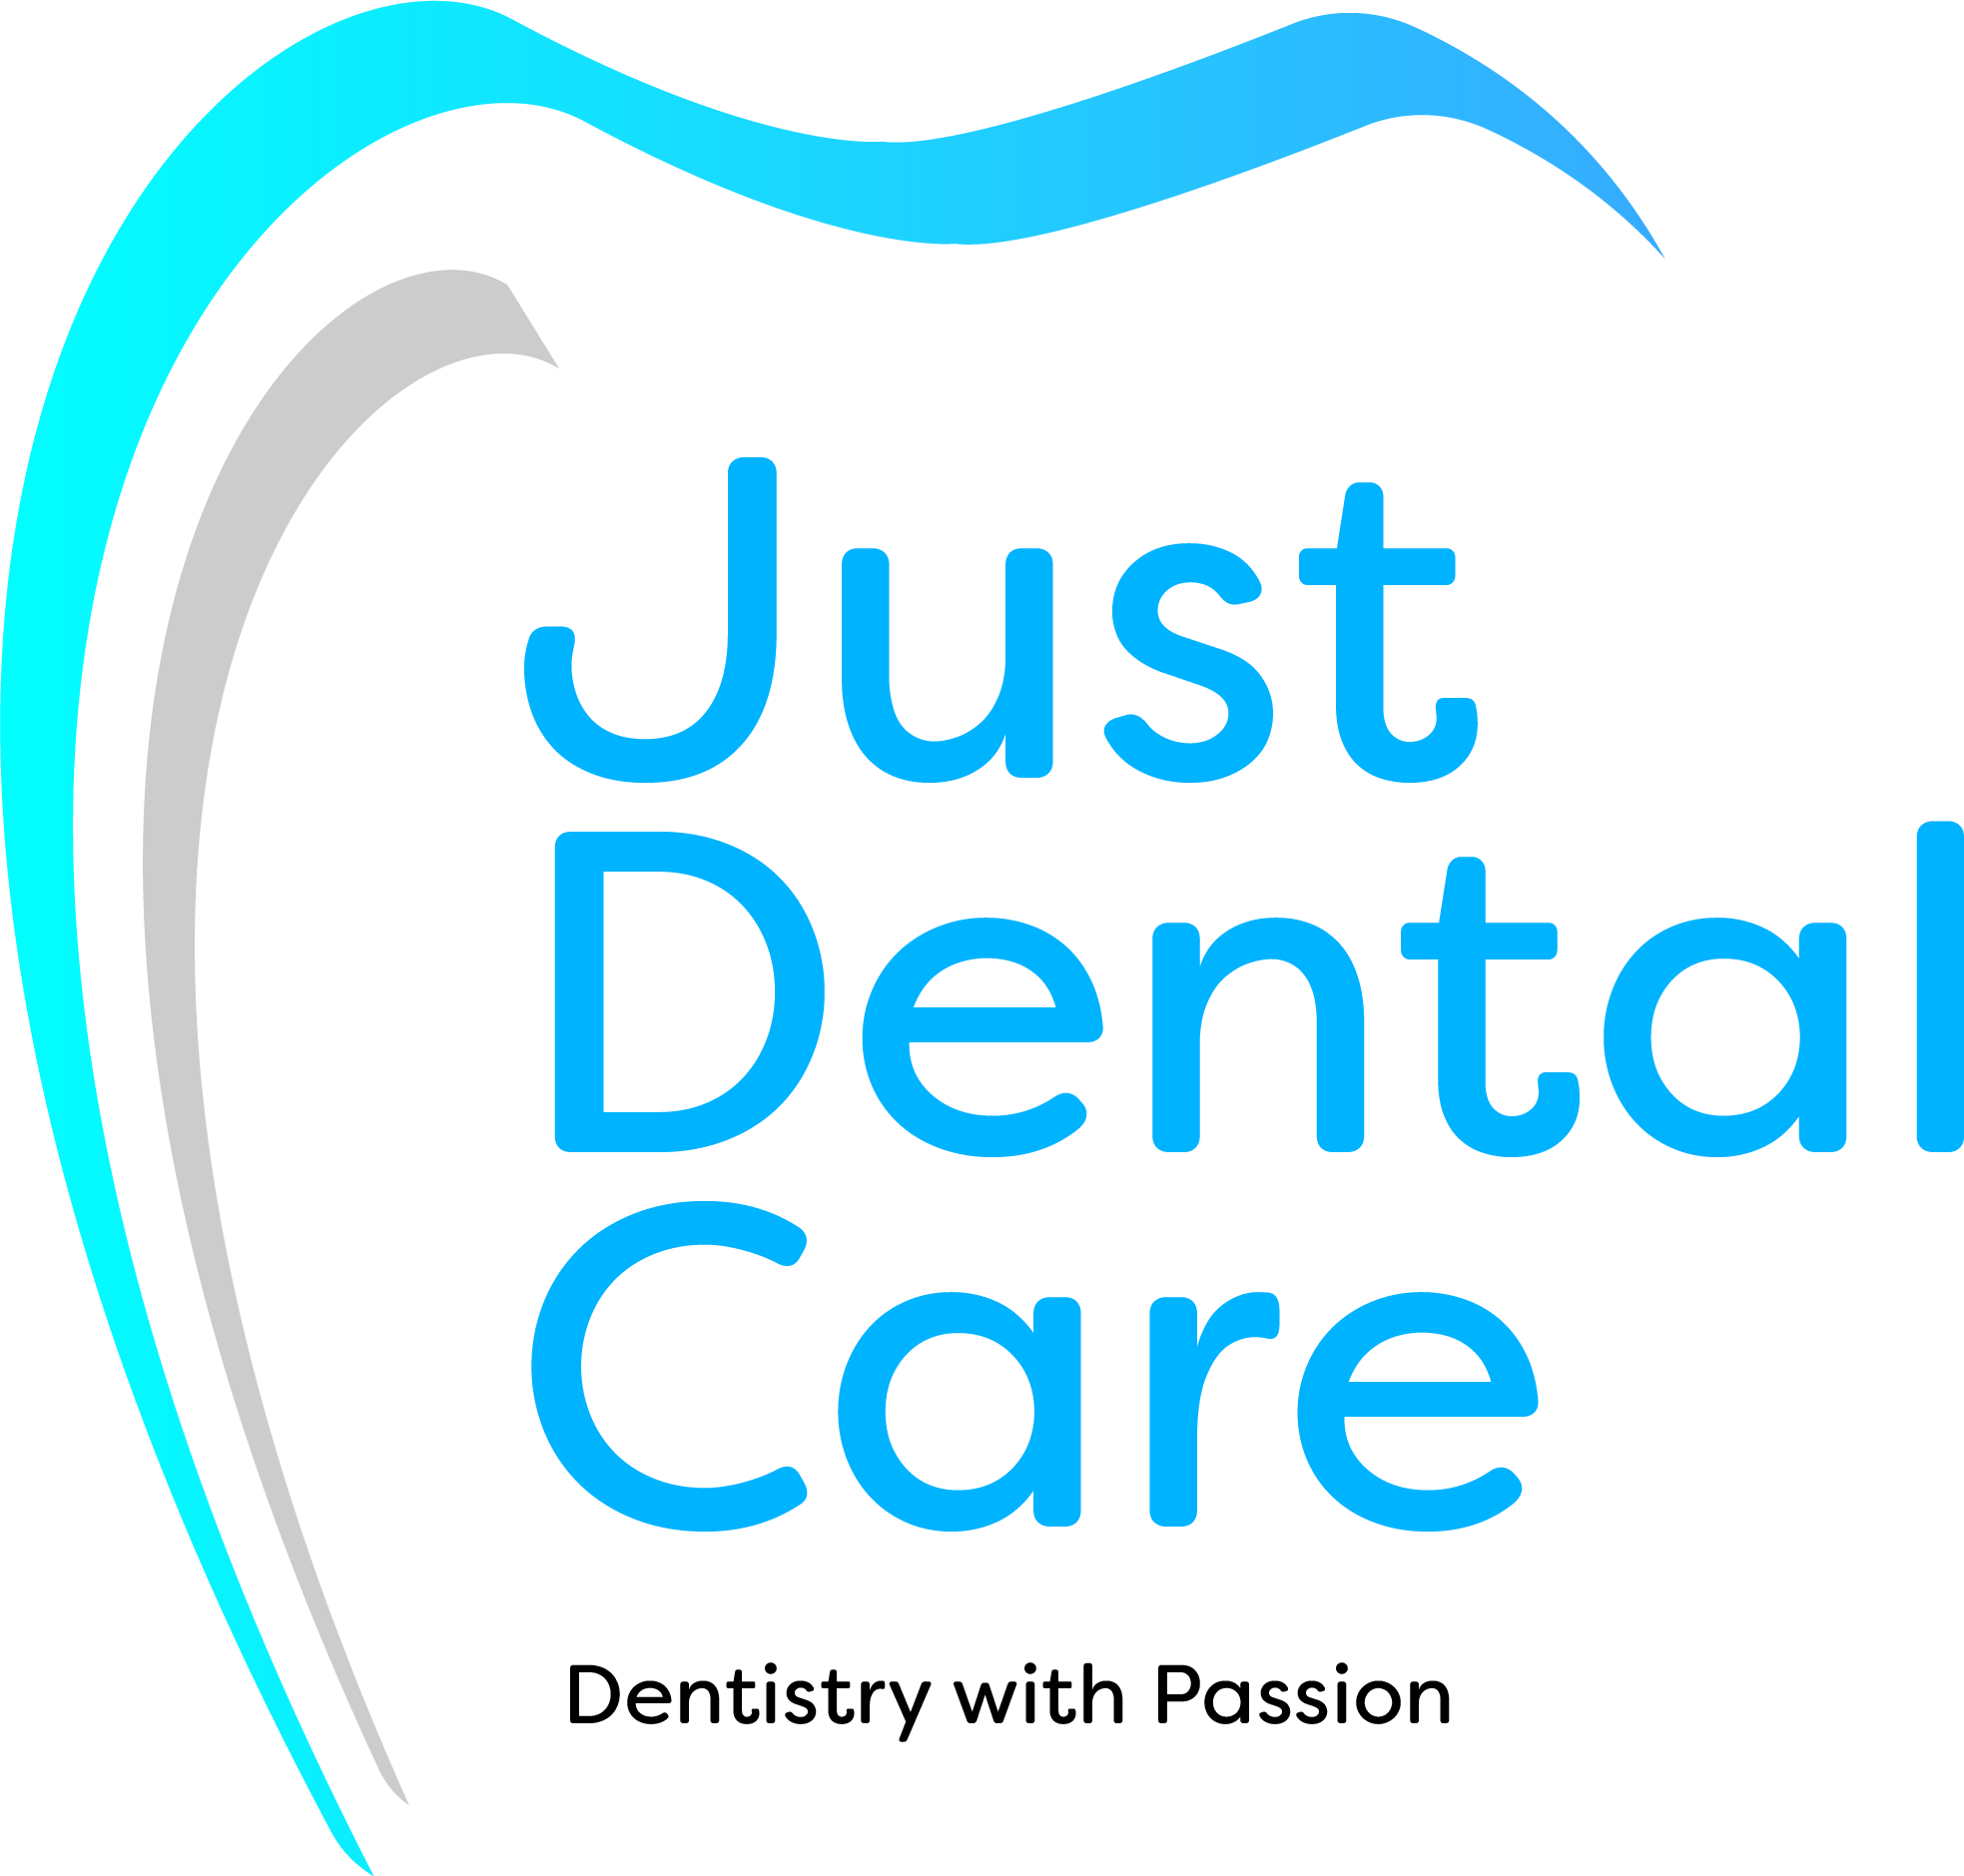 Just dental care logo